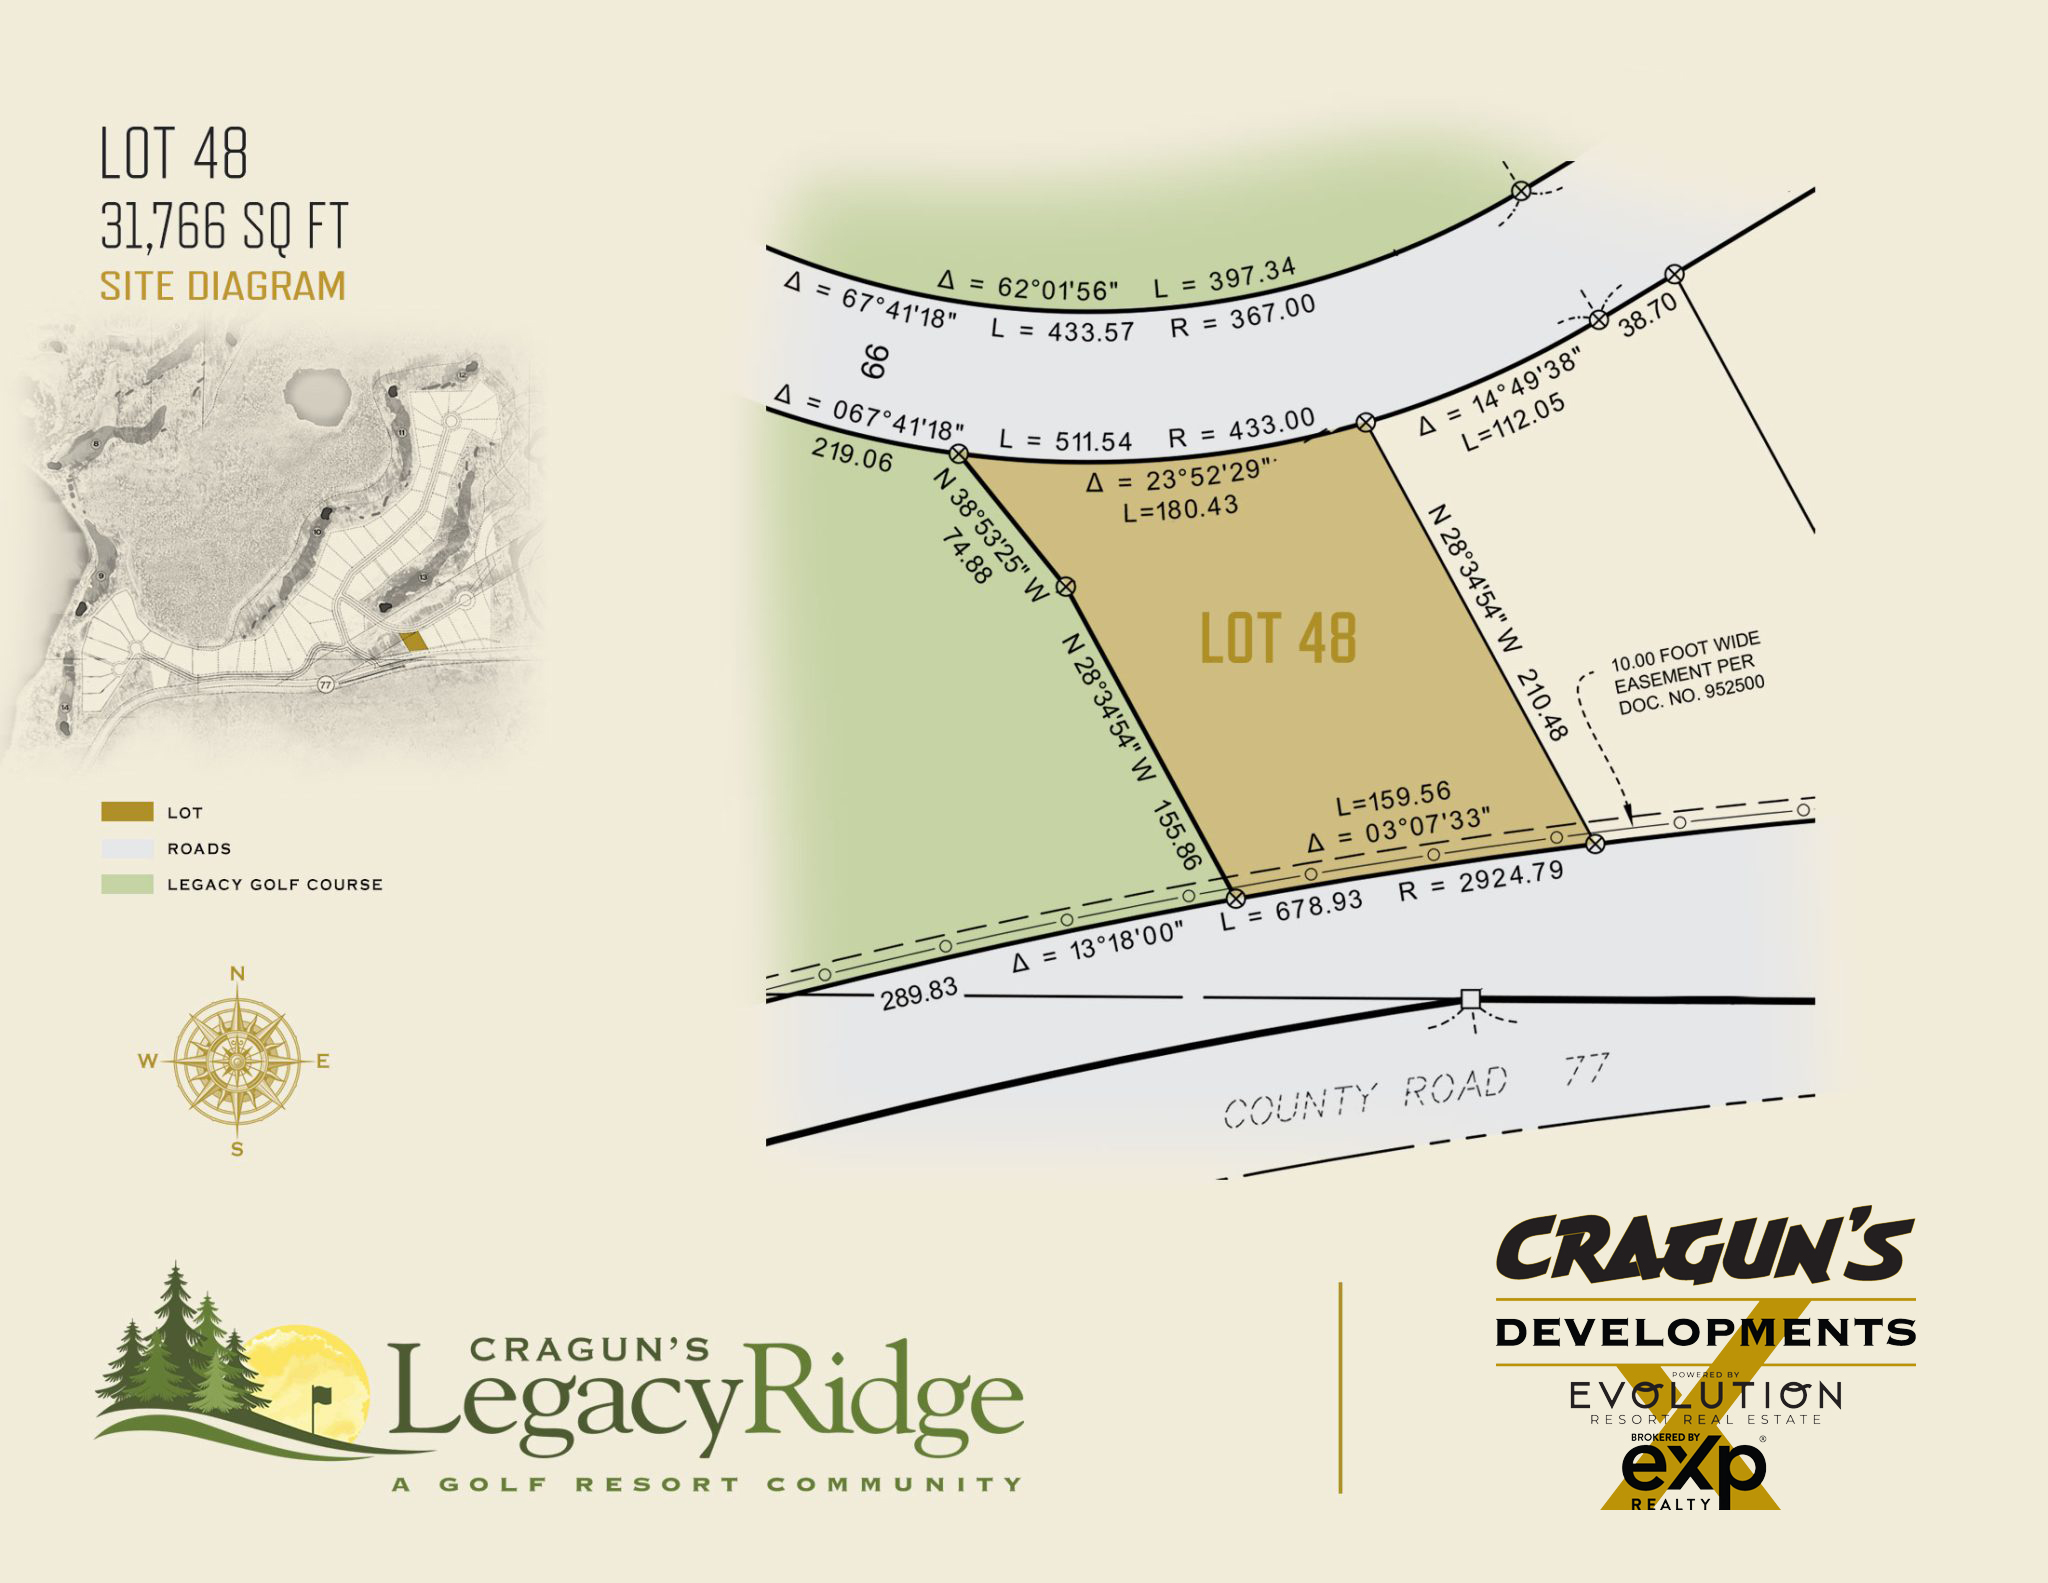 Legacy Ridge Lot 48 at Cragun's Developments in Brainerd, MN